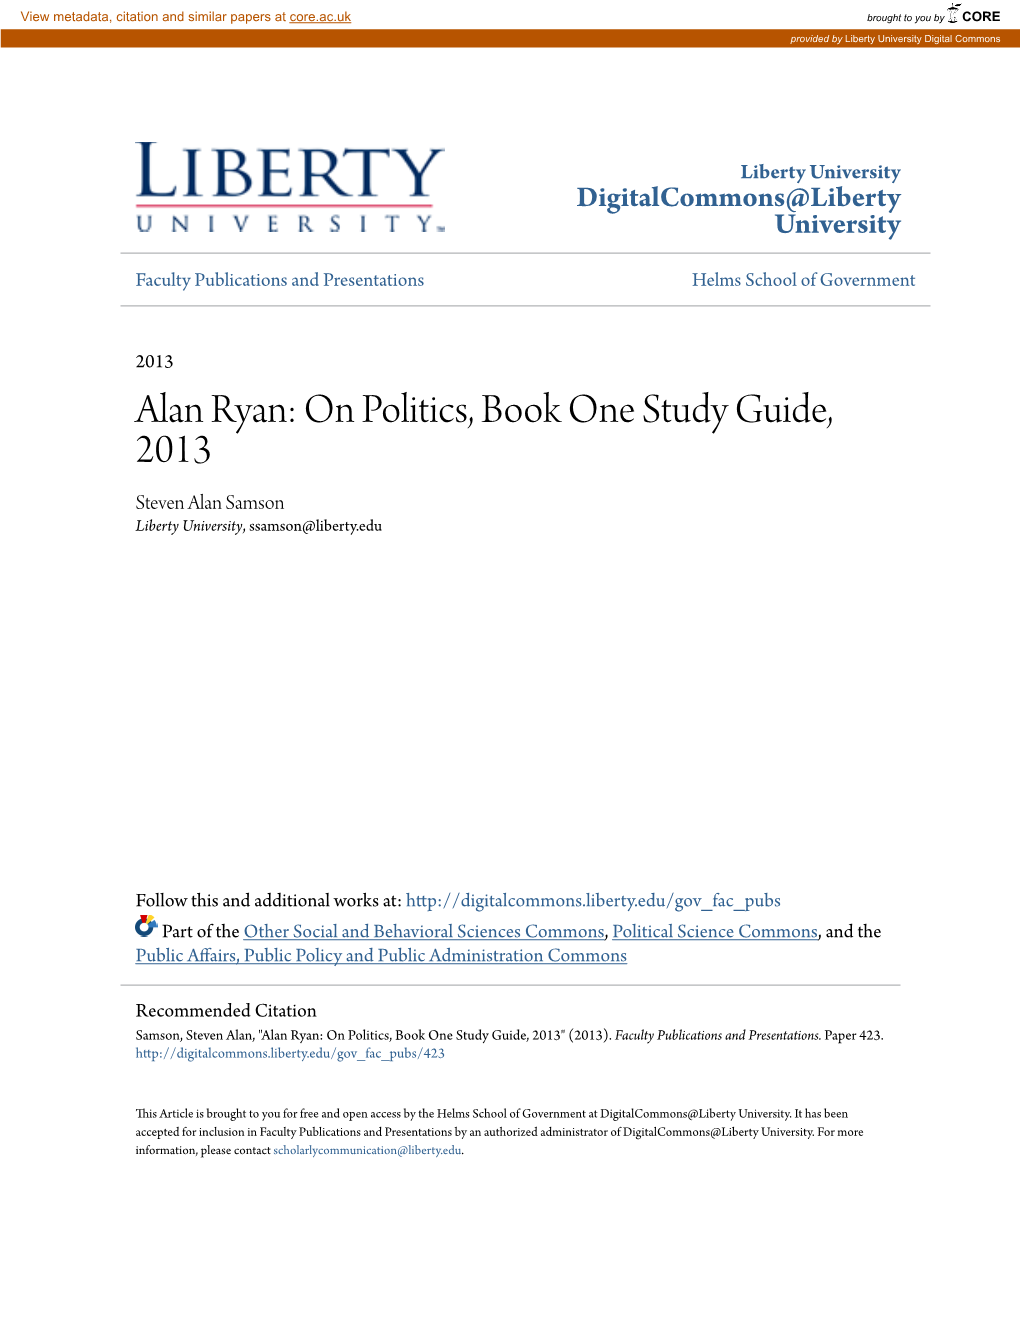 On Politics, Book One Study Guide, 2013 Steven Alan Samson Liberty University, Ssamson@Liberty.Edu